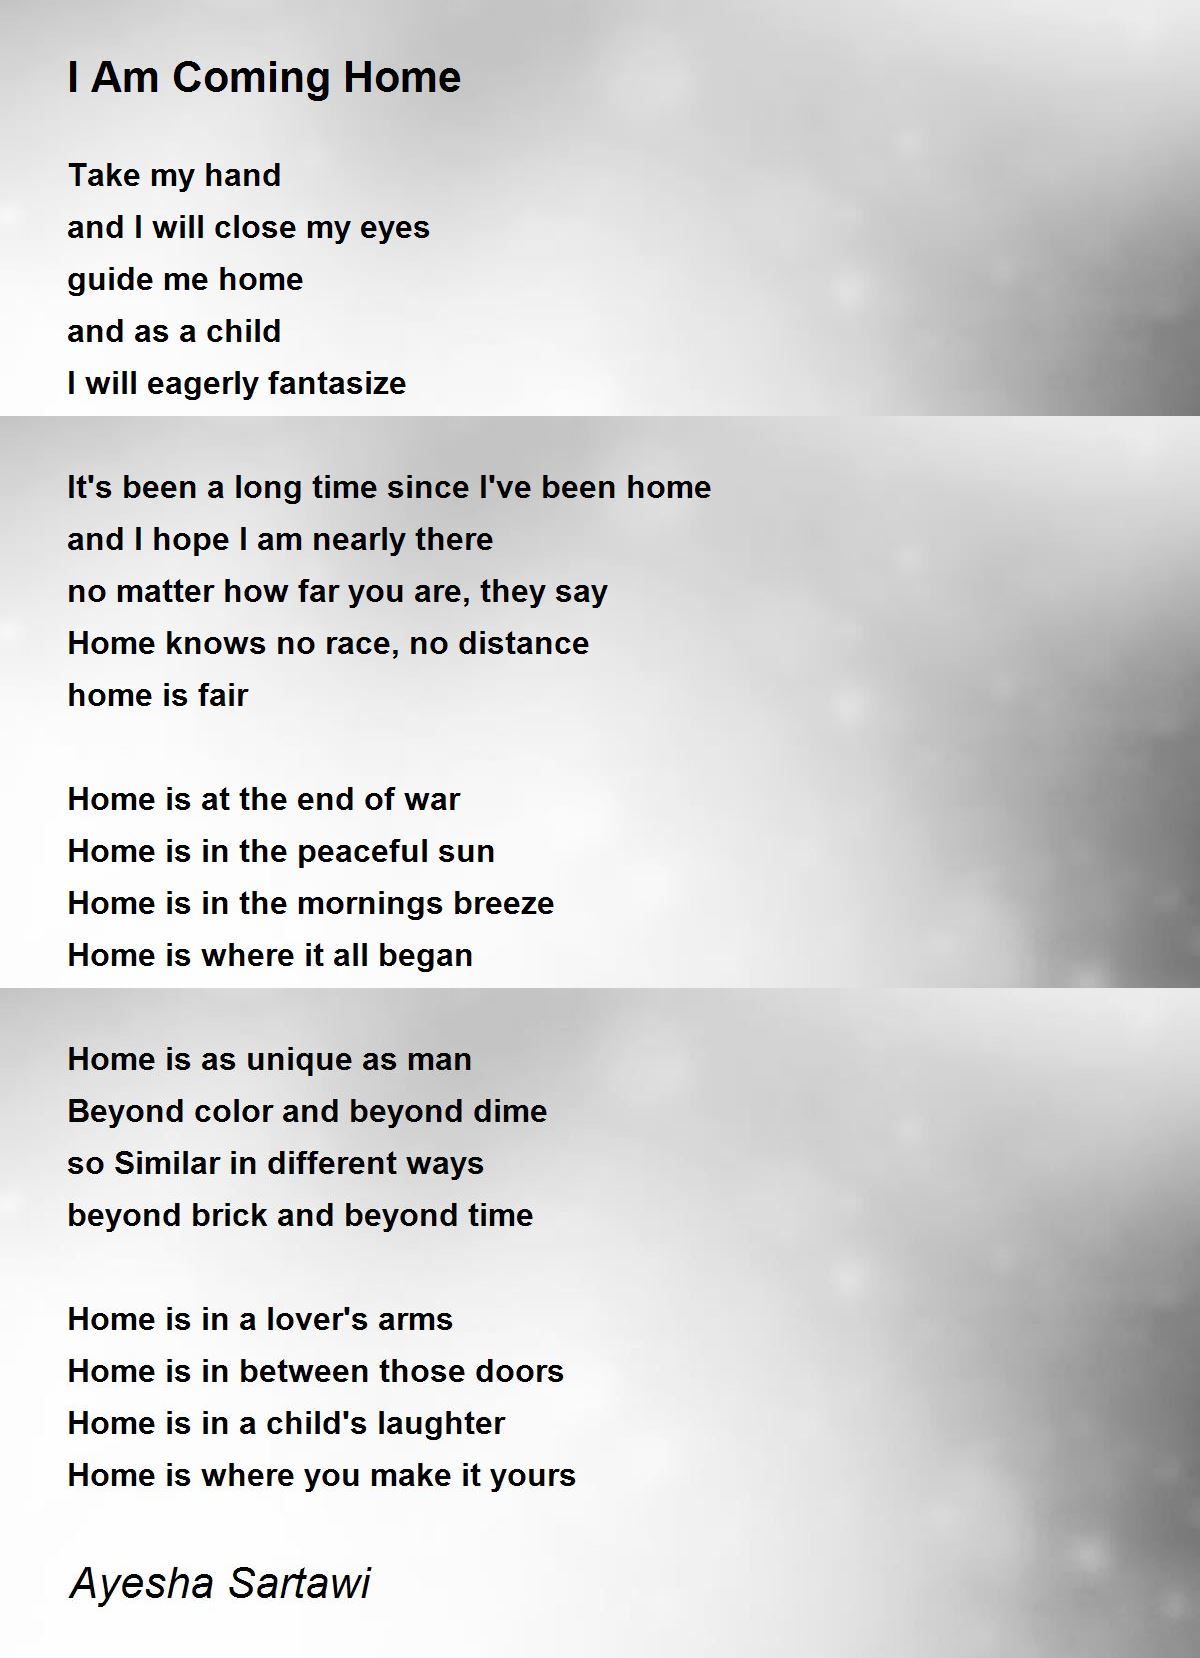 I Am Coming Home Poem by Ayesha Sartawi - Poem Hunter